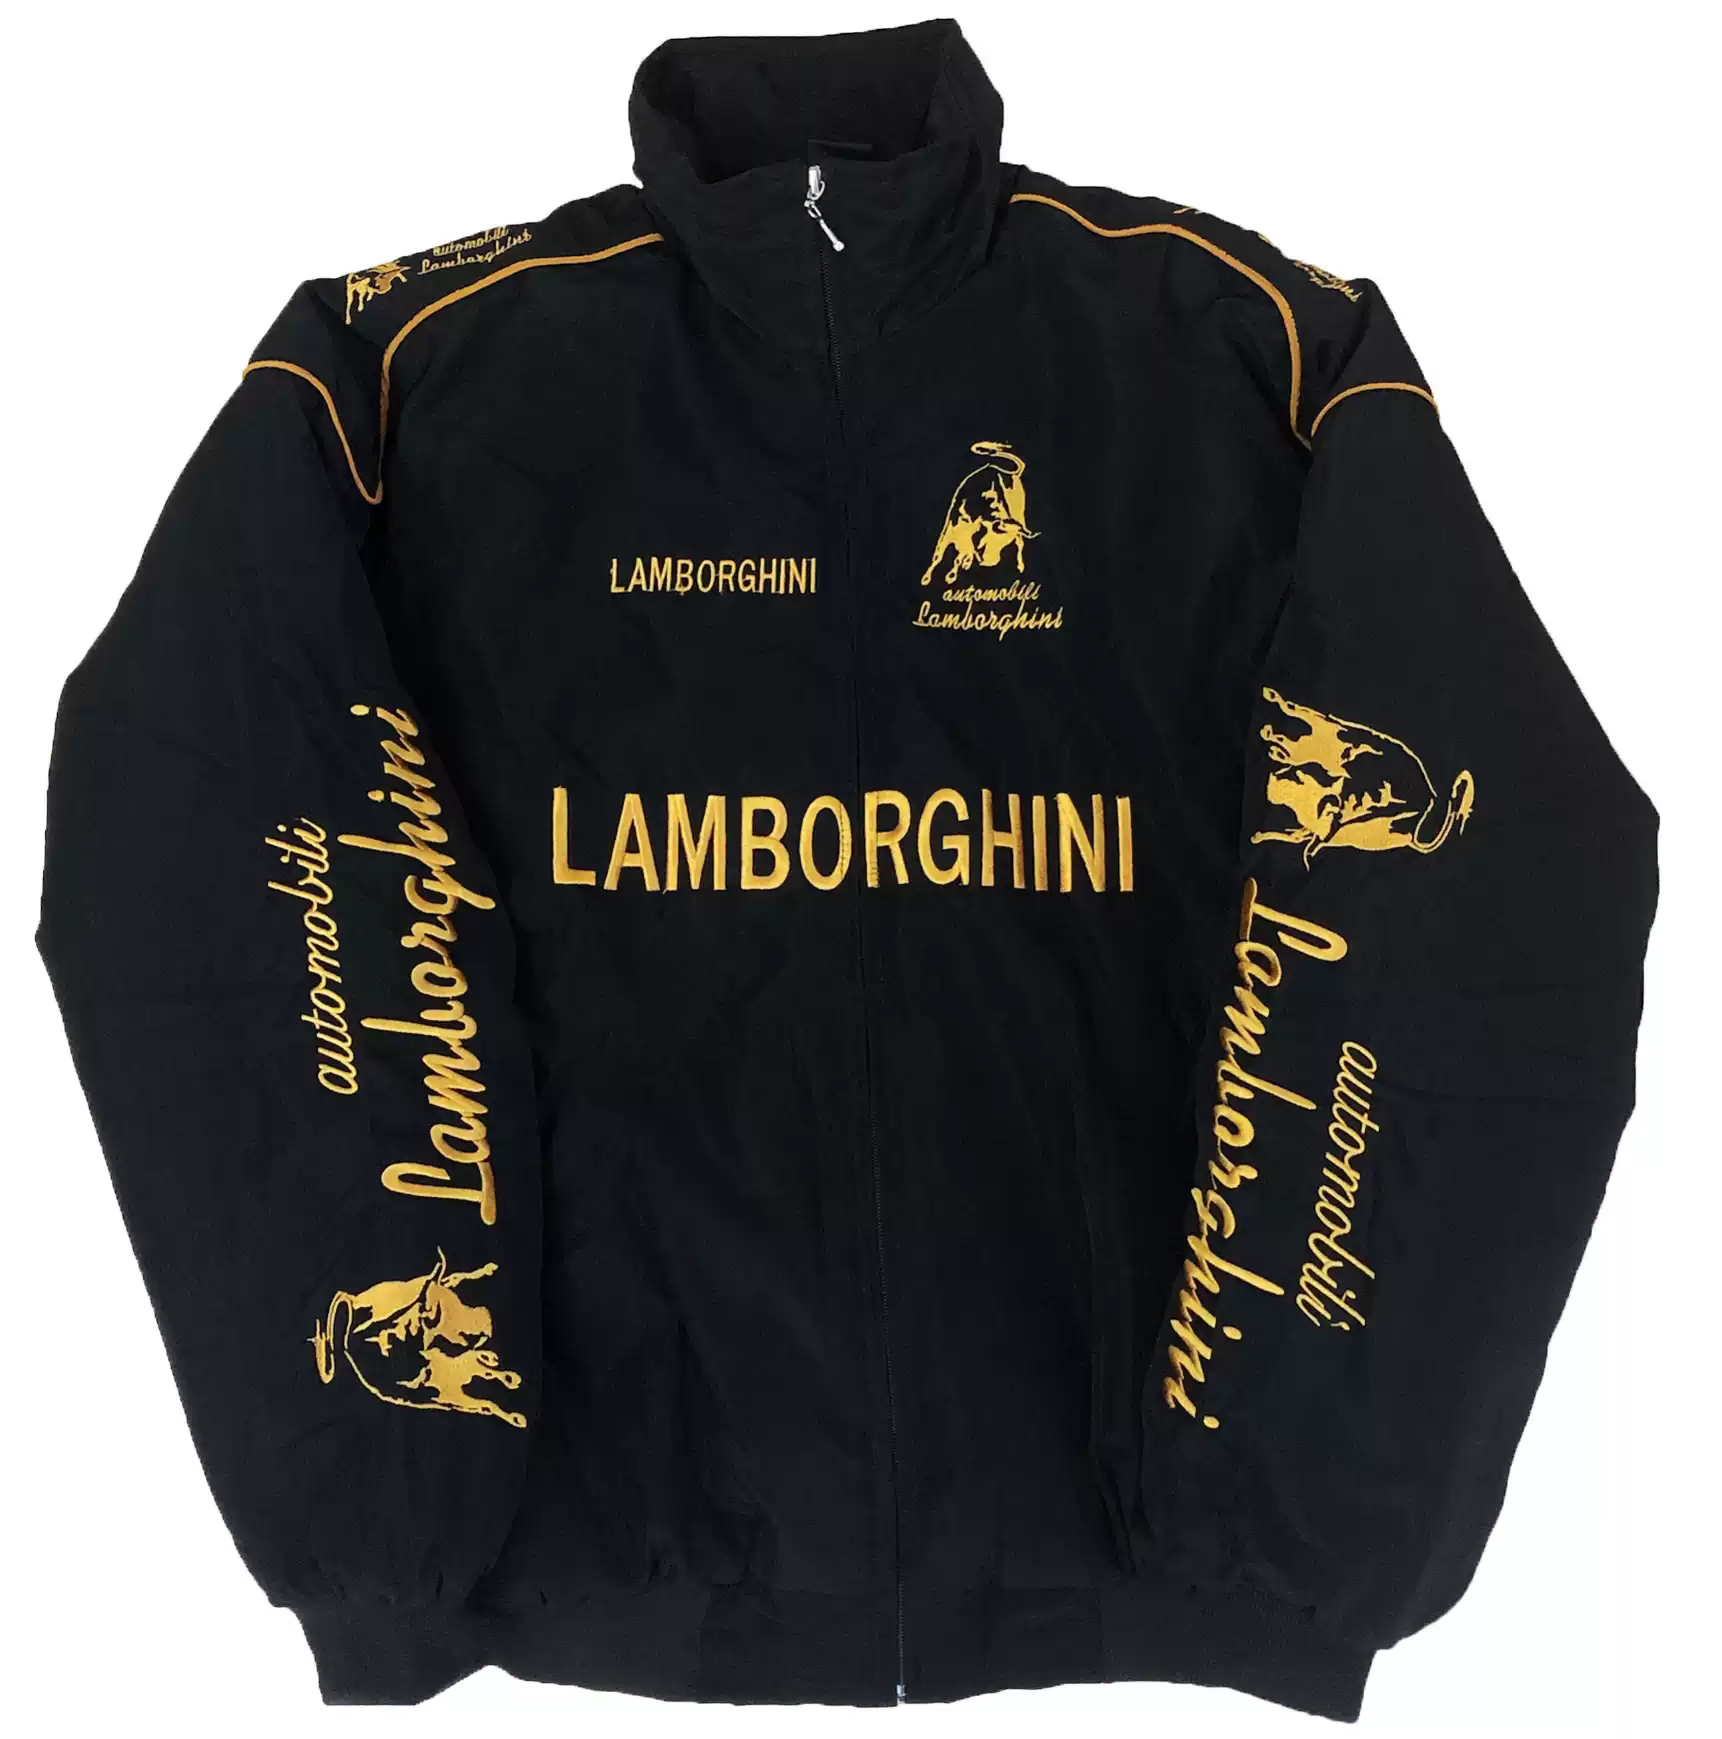 Lamborghini Jacket | Lamborghini Racing Jacket | F1 Vintage